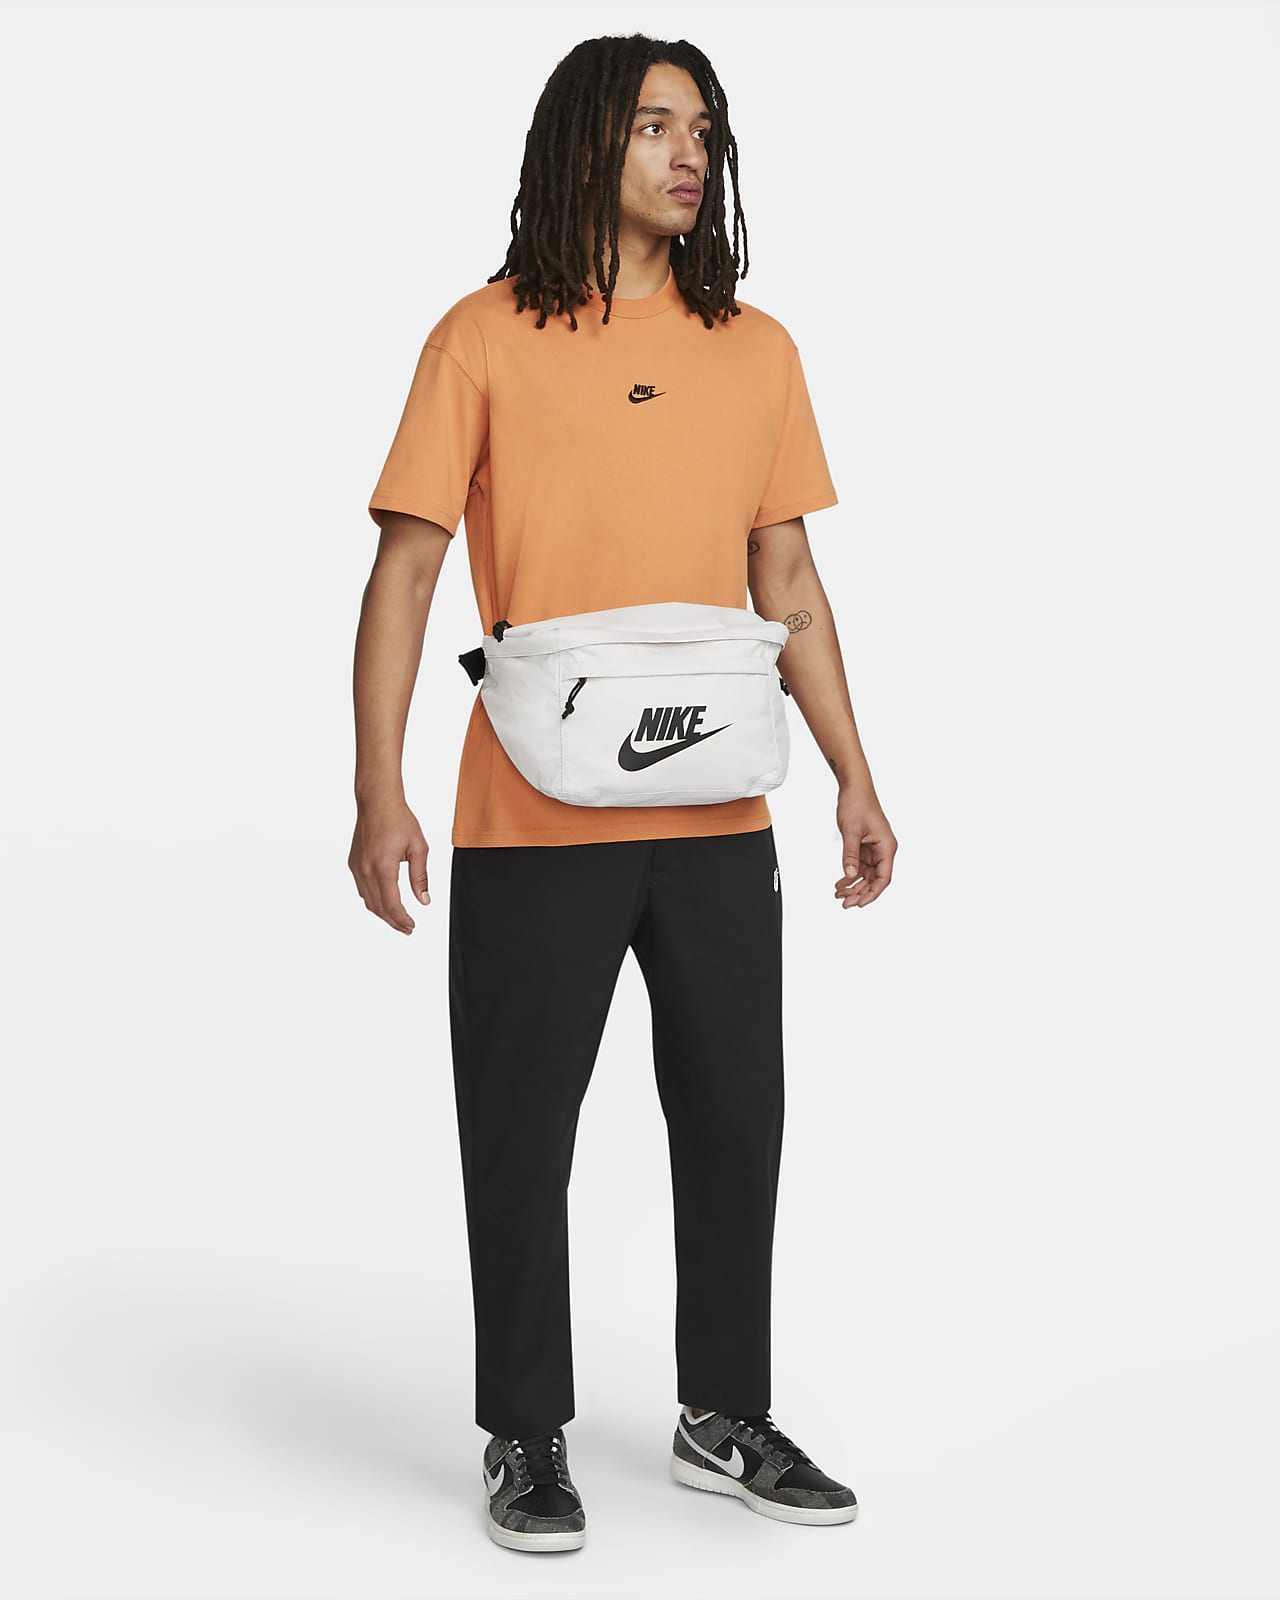 Cangurera Nike Tech